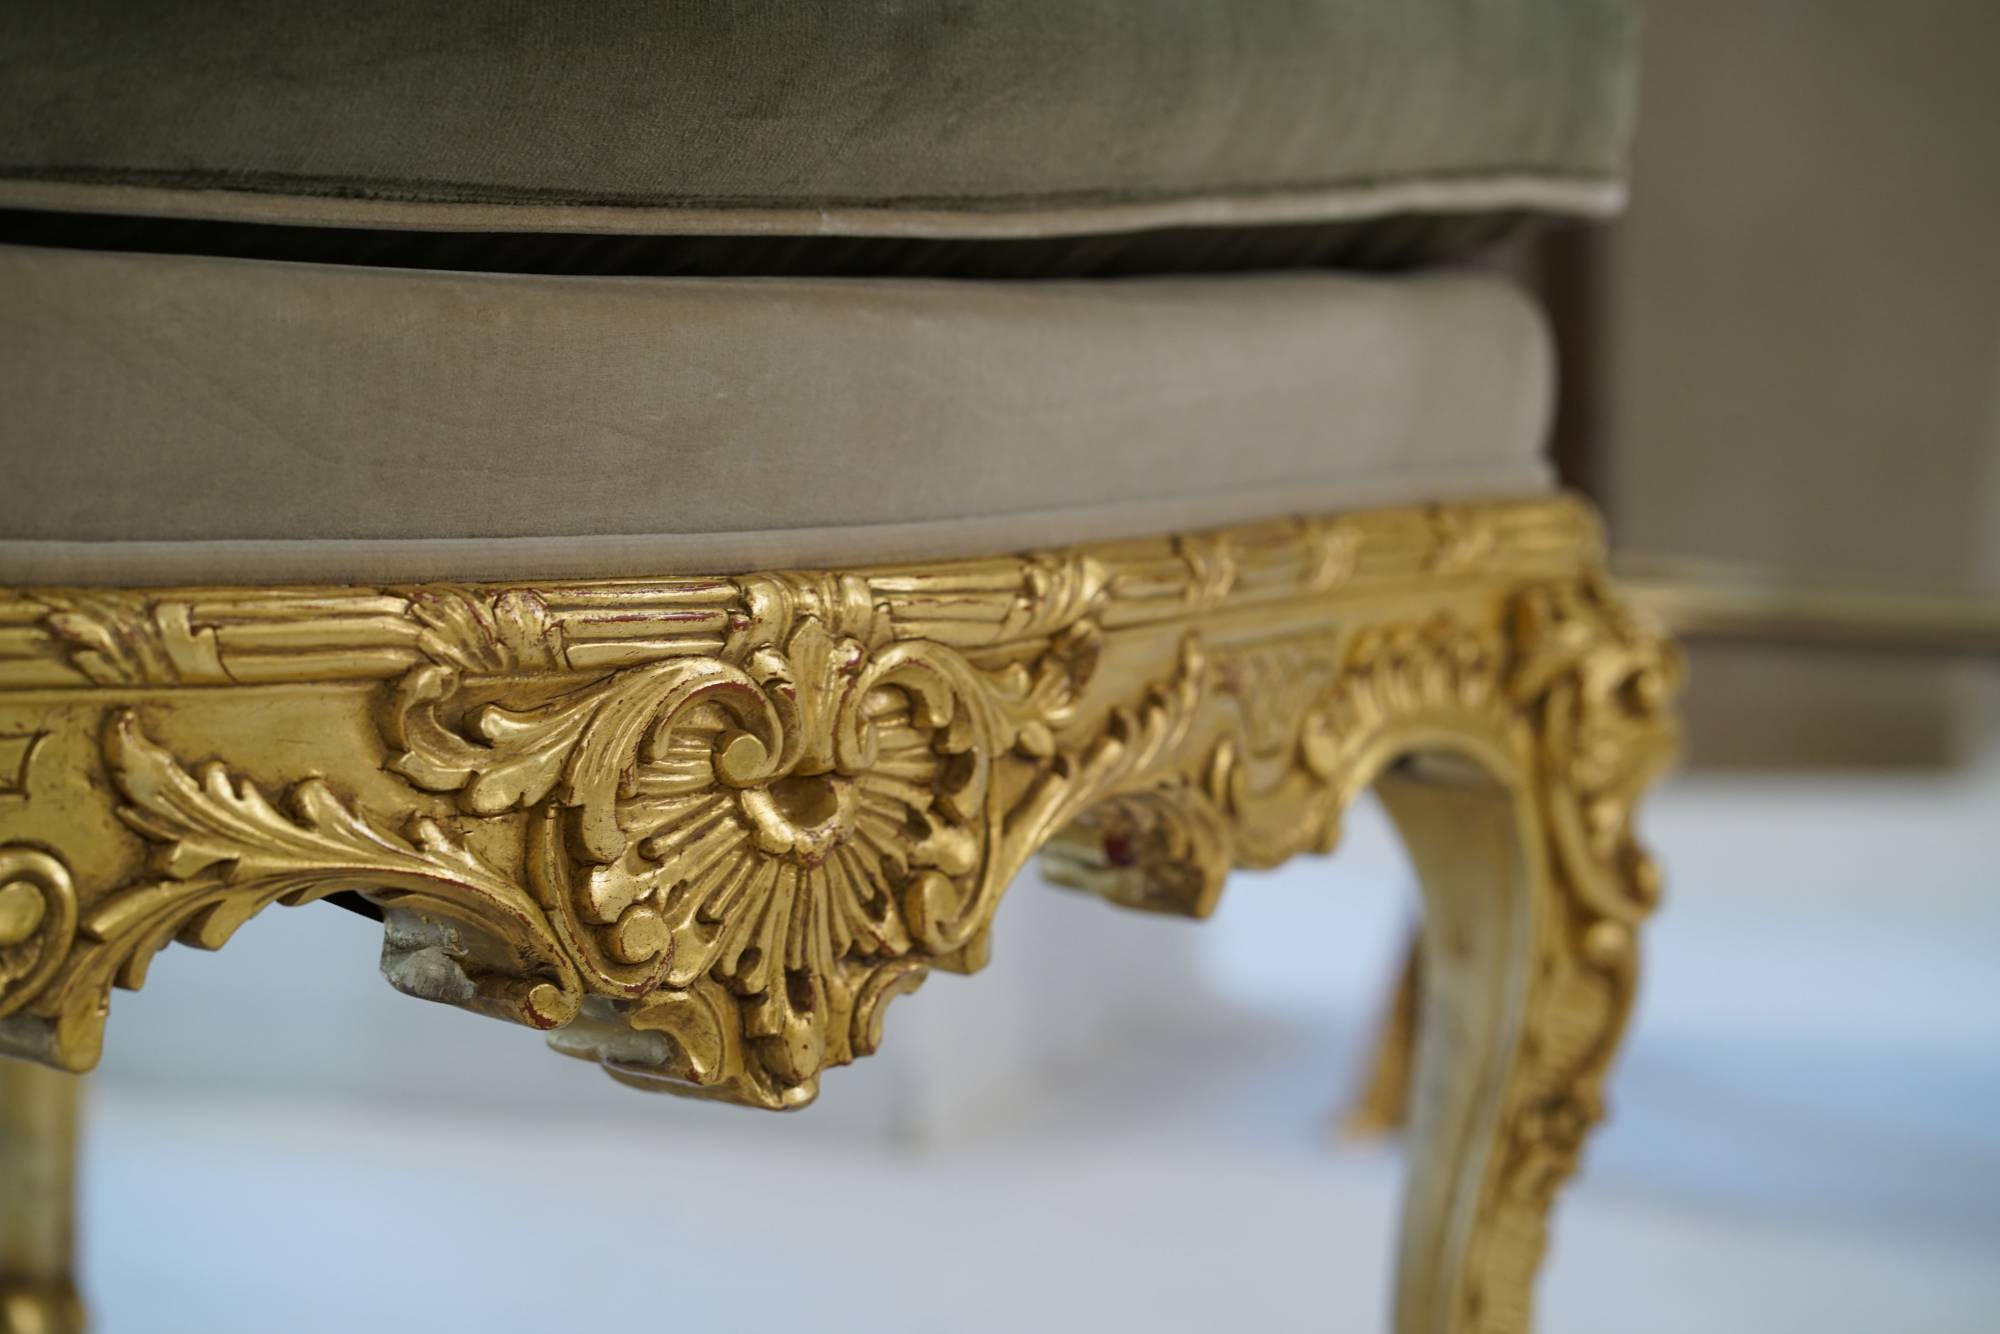 ART. 2190 – C.G. Capelletti Italian Luxury Classic Armchairs. Made in Italy classic interior design